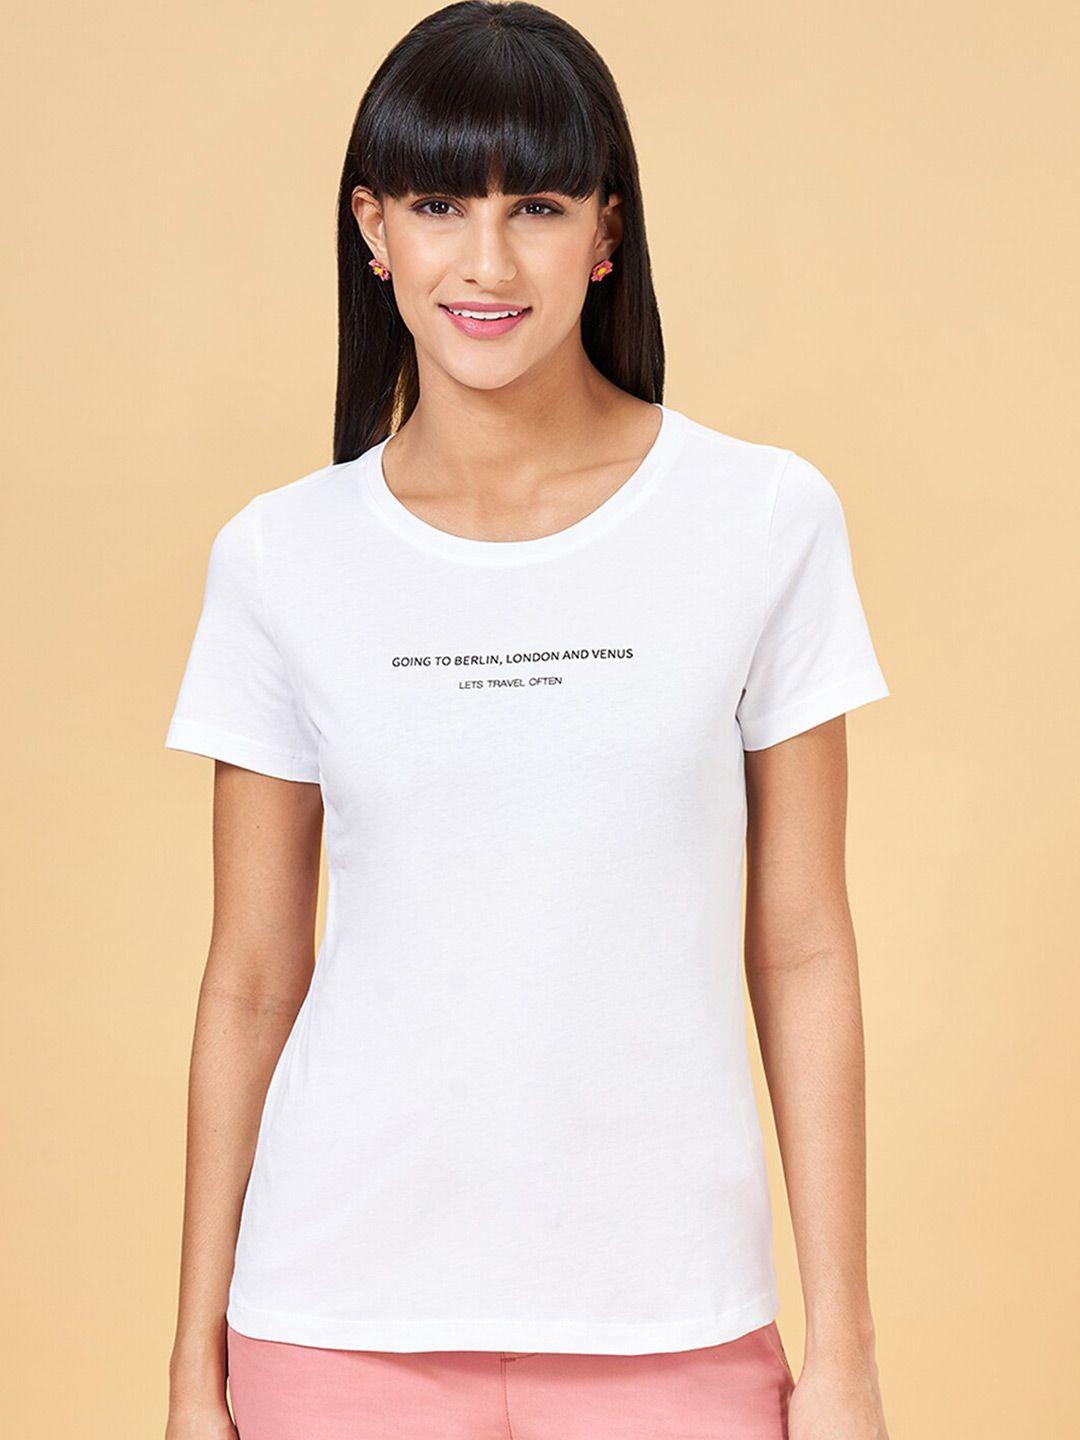 honey-by-pantaloons-women-typography-t-shirt